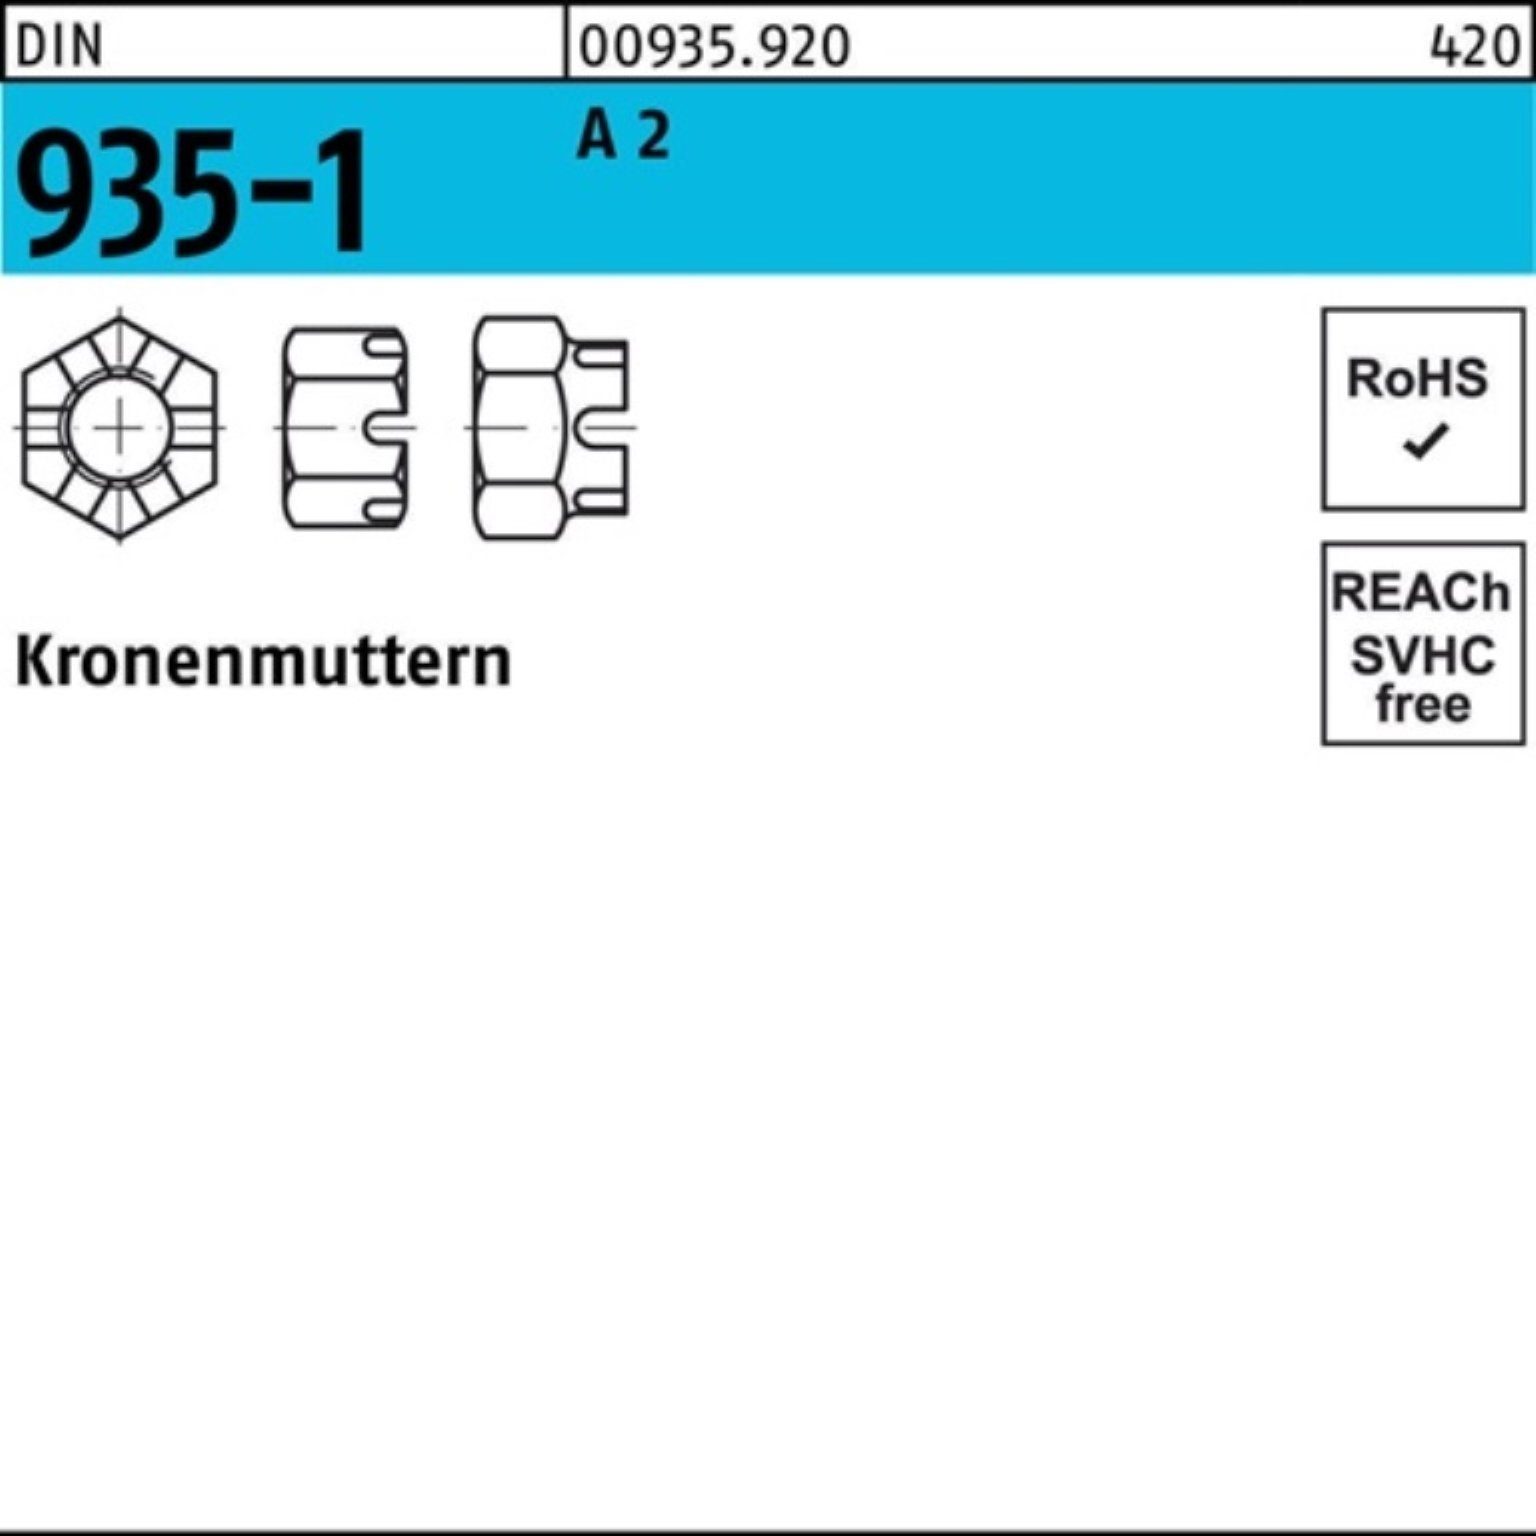 Stück 50 Reyher Kronenmutter 935-1 Krone 935-1 DIN A 100er 2 M6 DIN Kronenmutter 2 Pack A